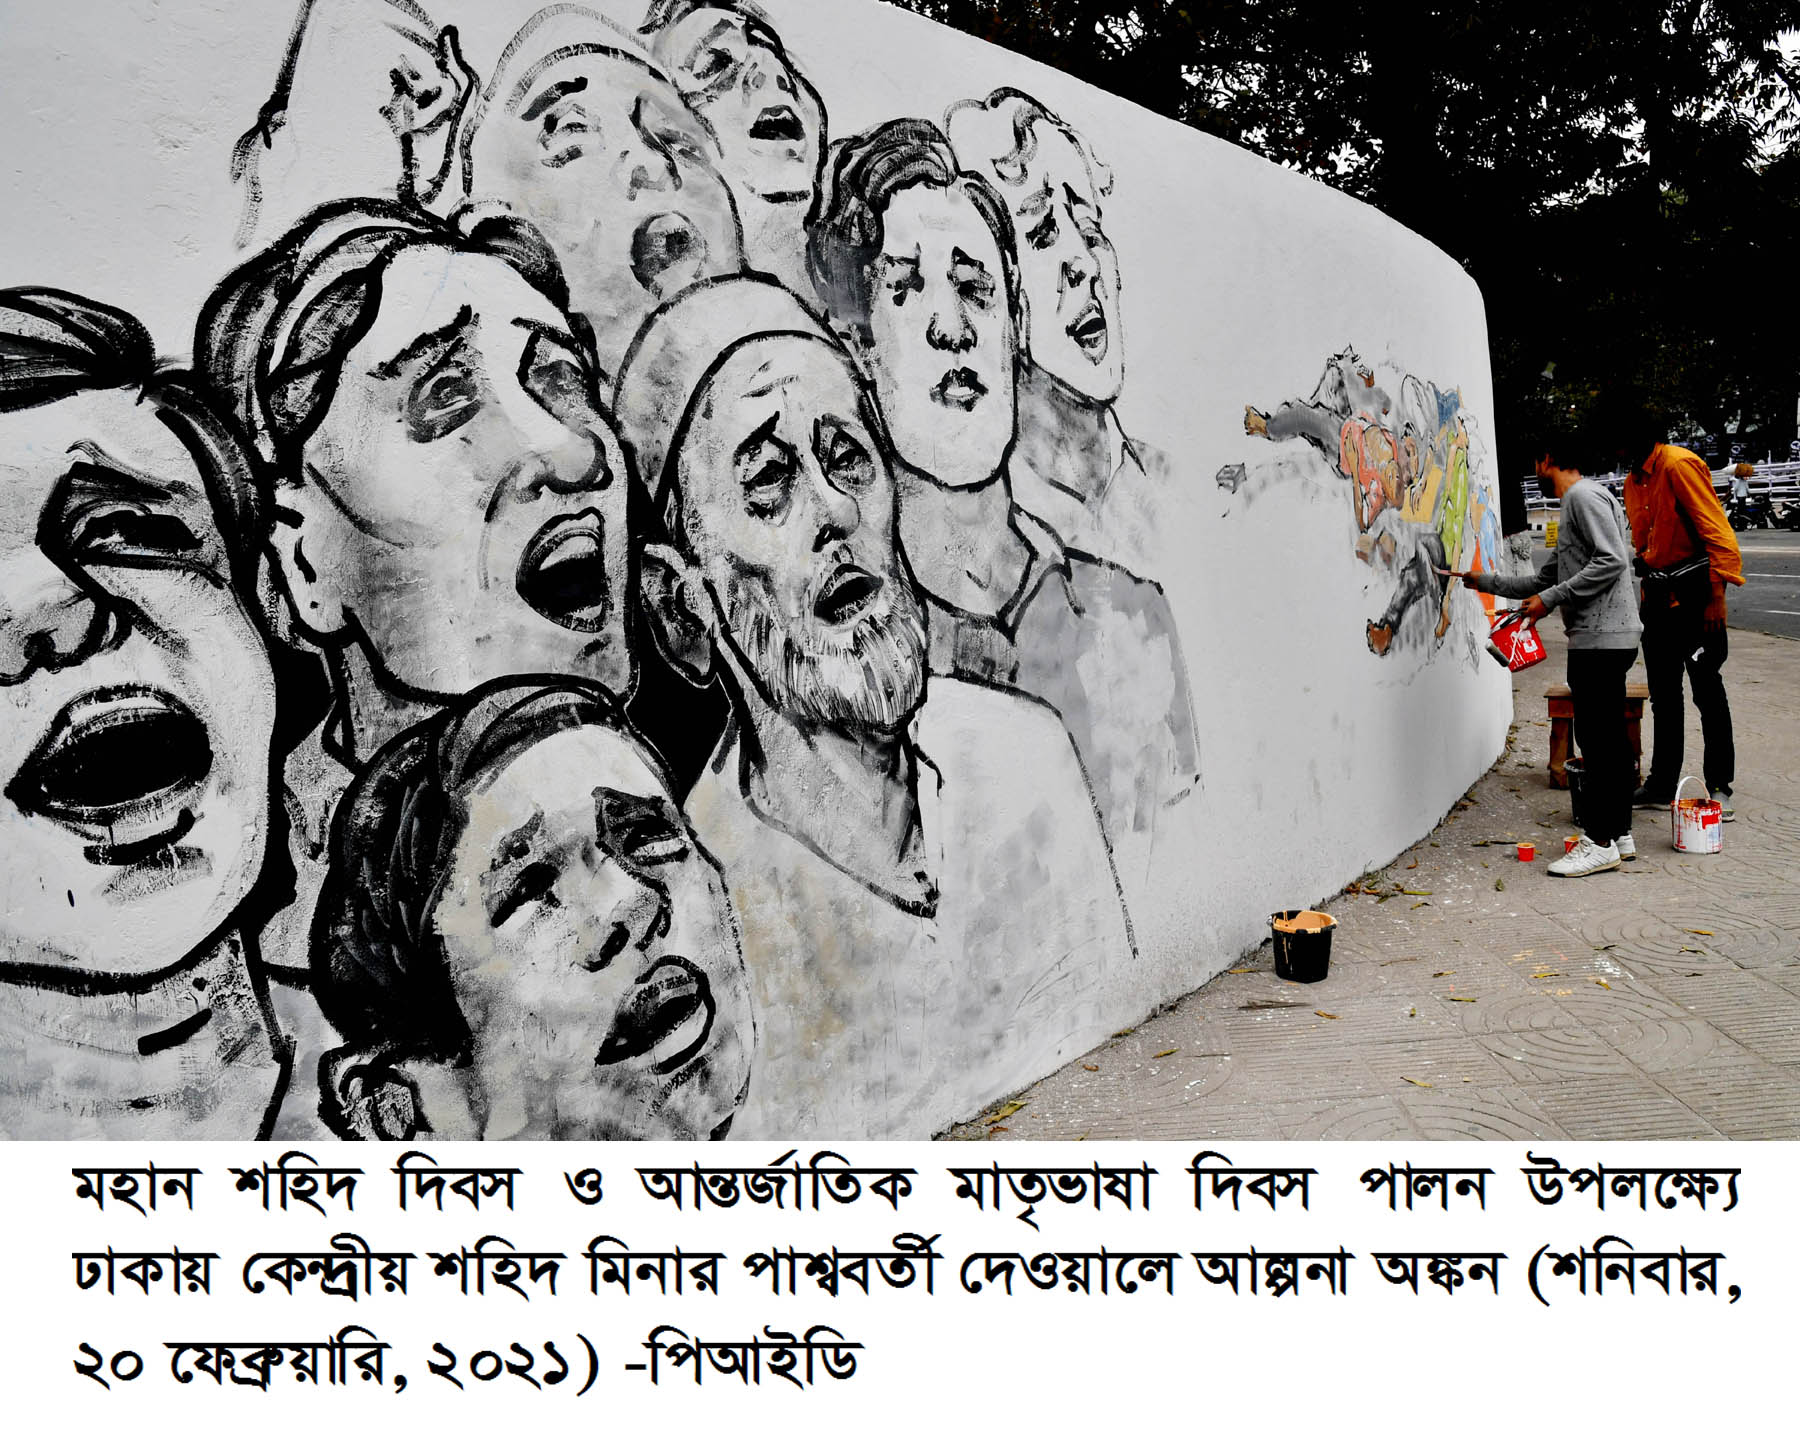 Bangladesh observes International Mother Language Day